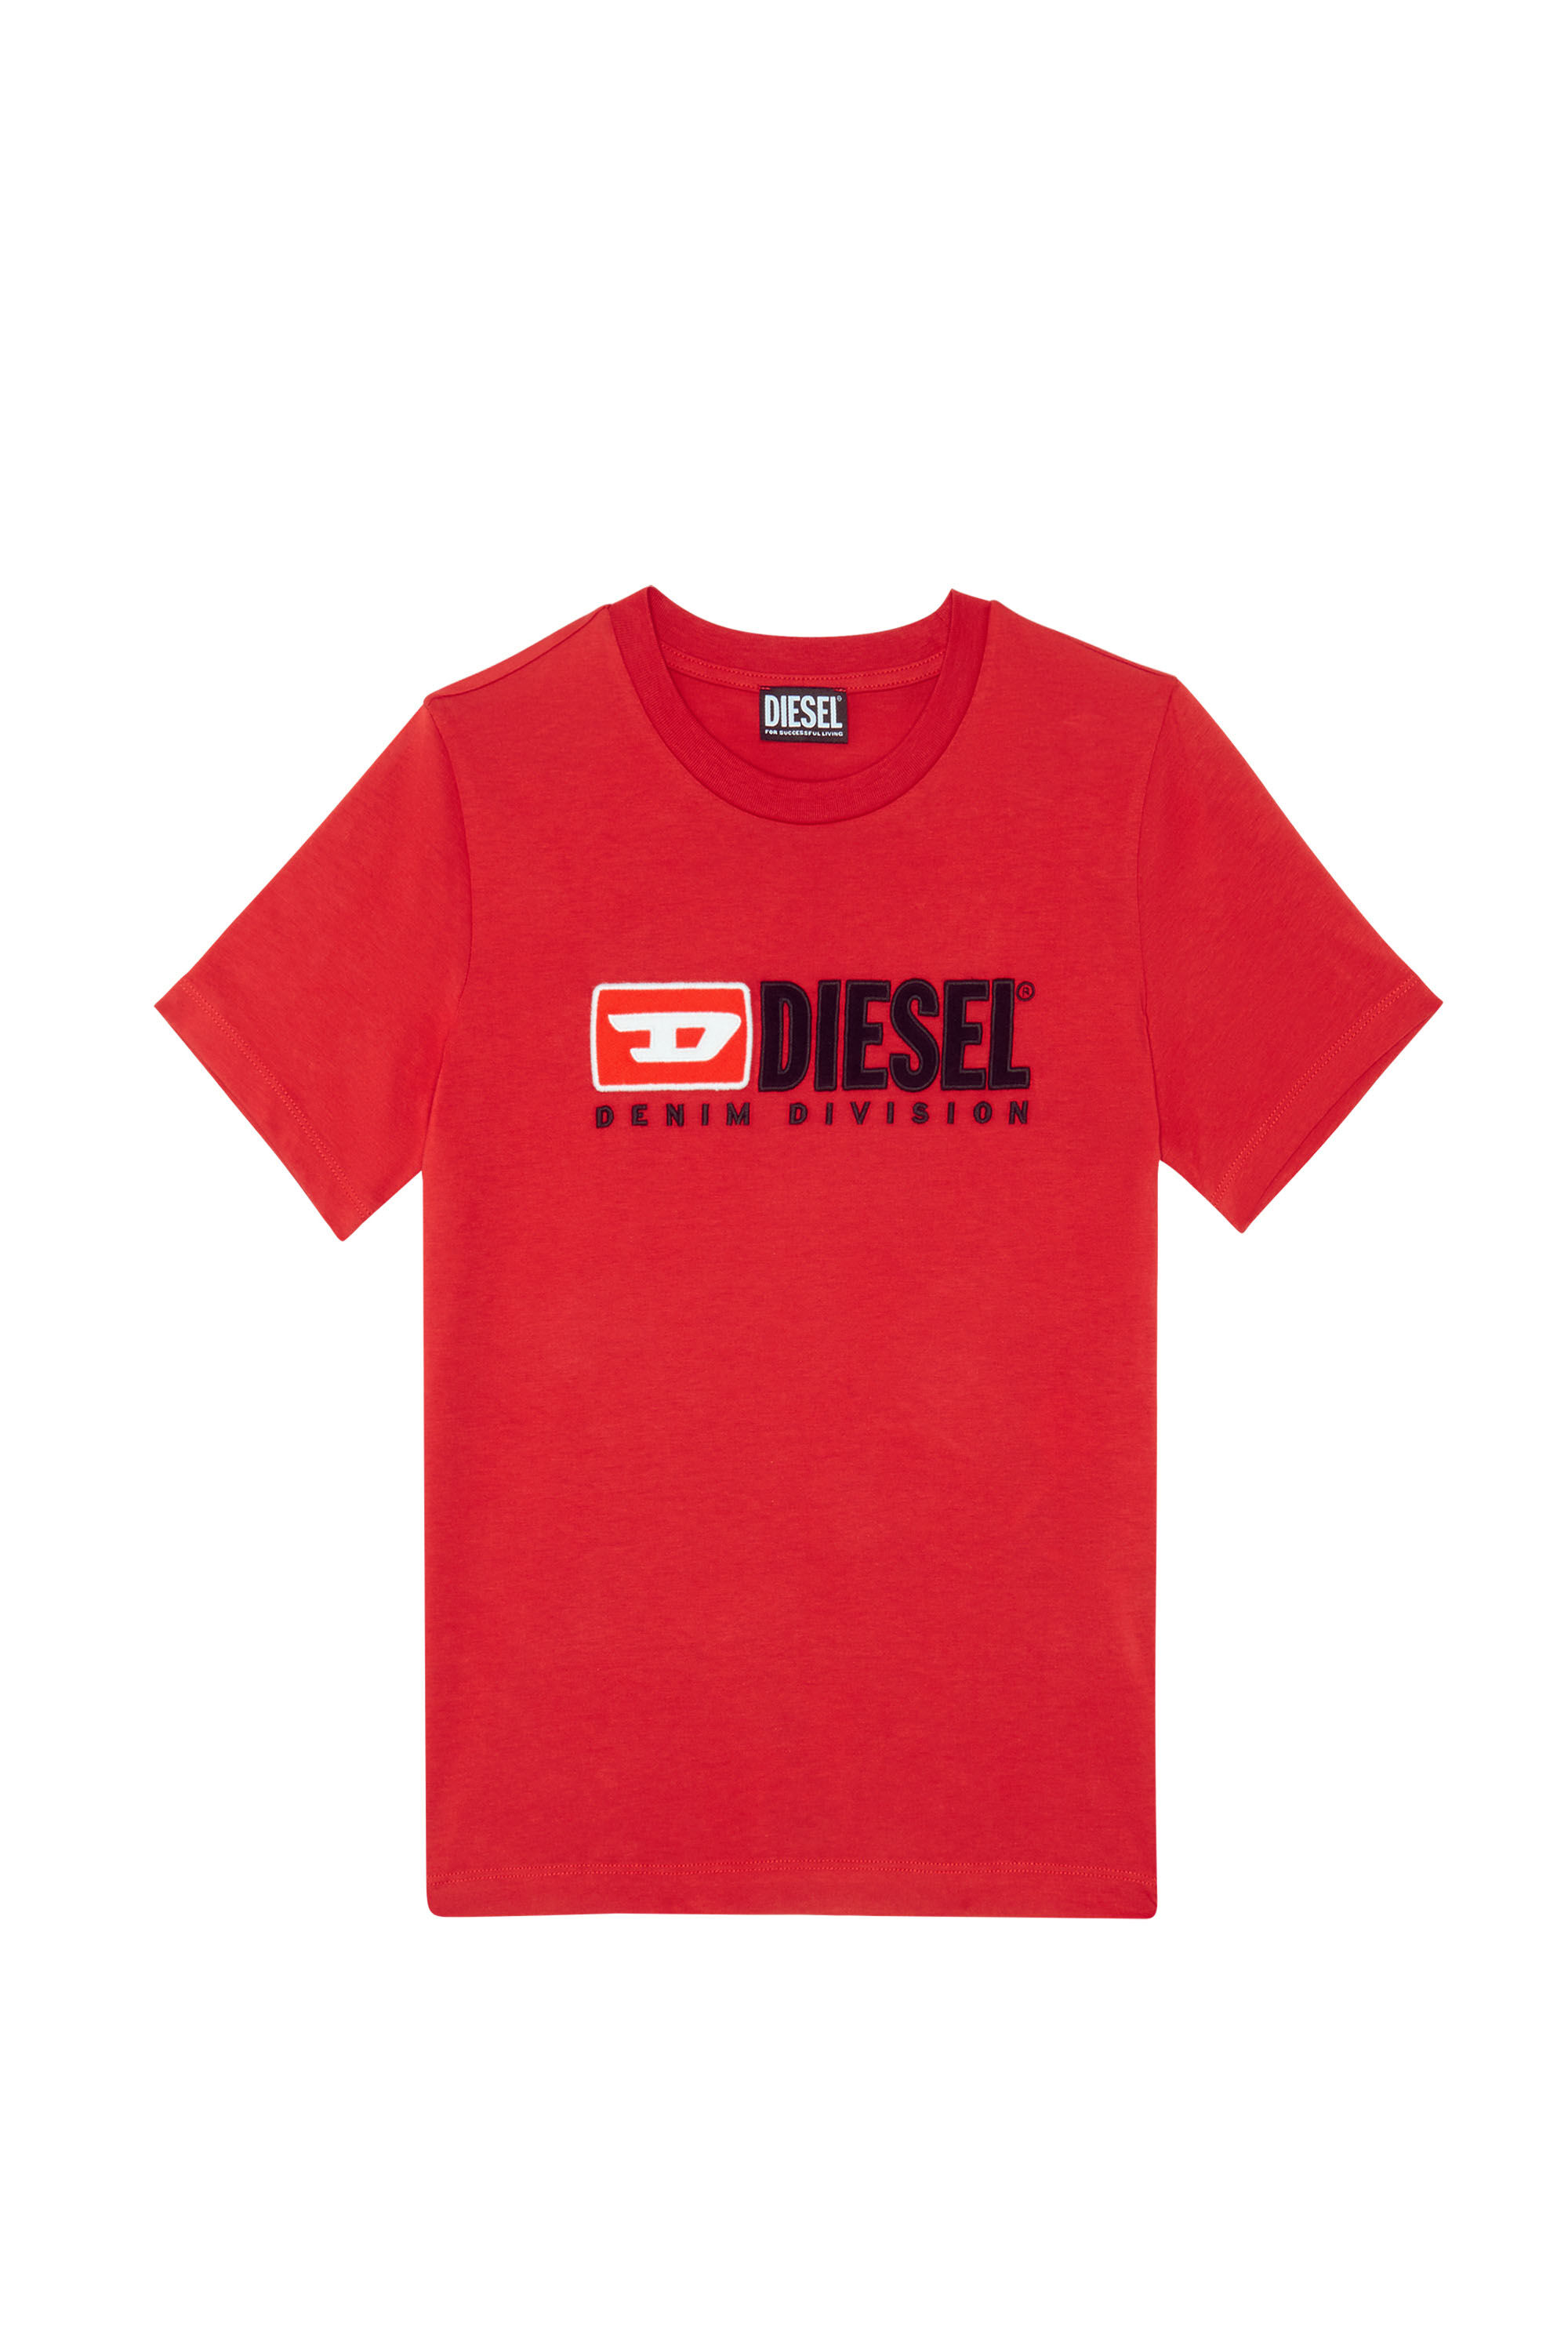 Diesel - T-REG-DIV, Red - Image 2